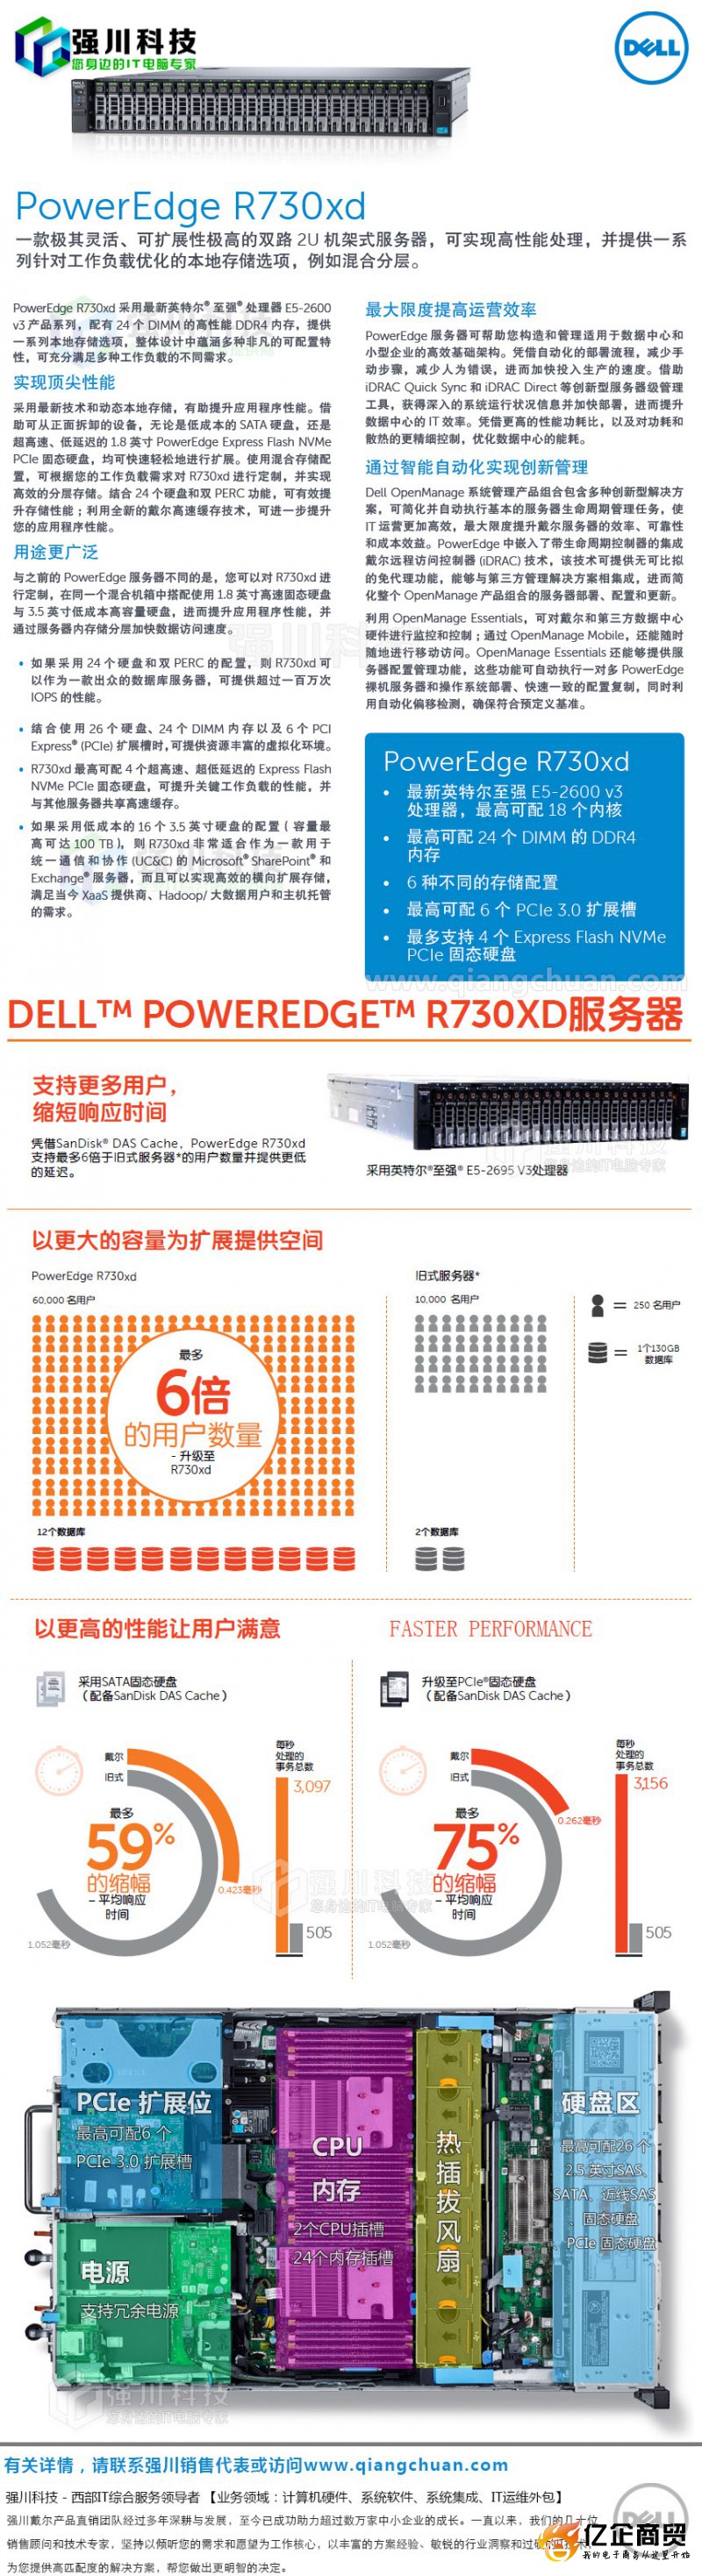 PowerEdge-R730xd机架式服务器